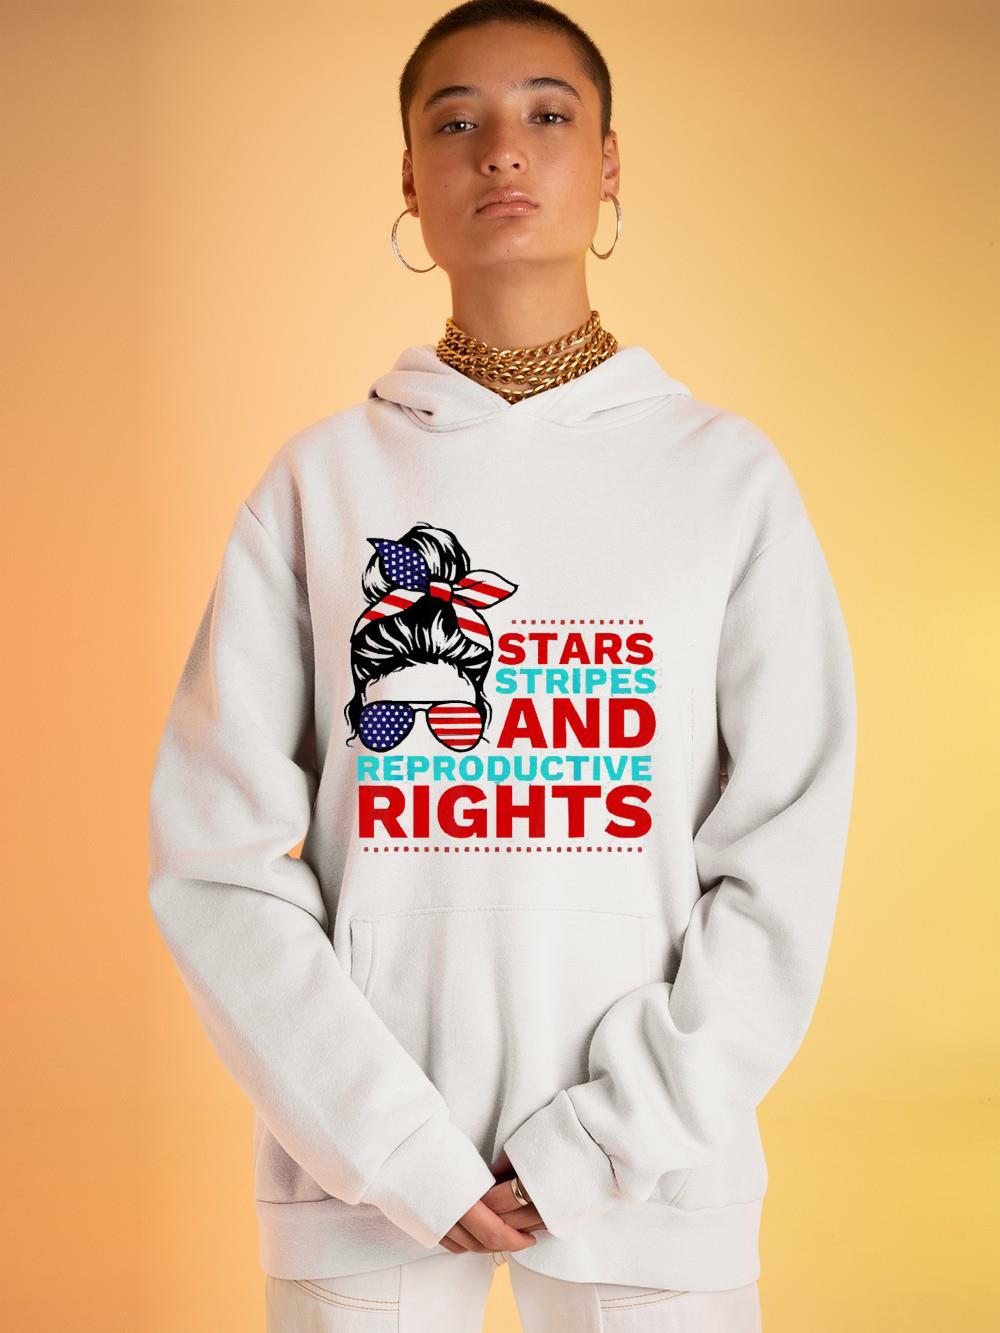 Stars Stripes Reproductive Rights 4th of July USA shirt